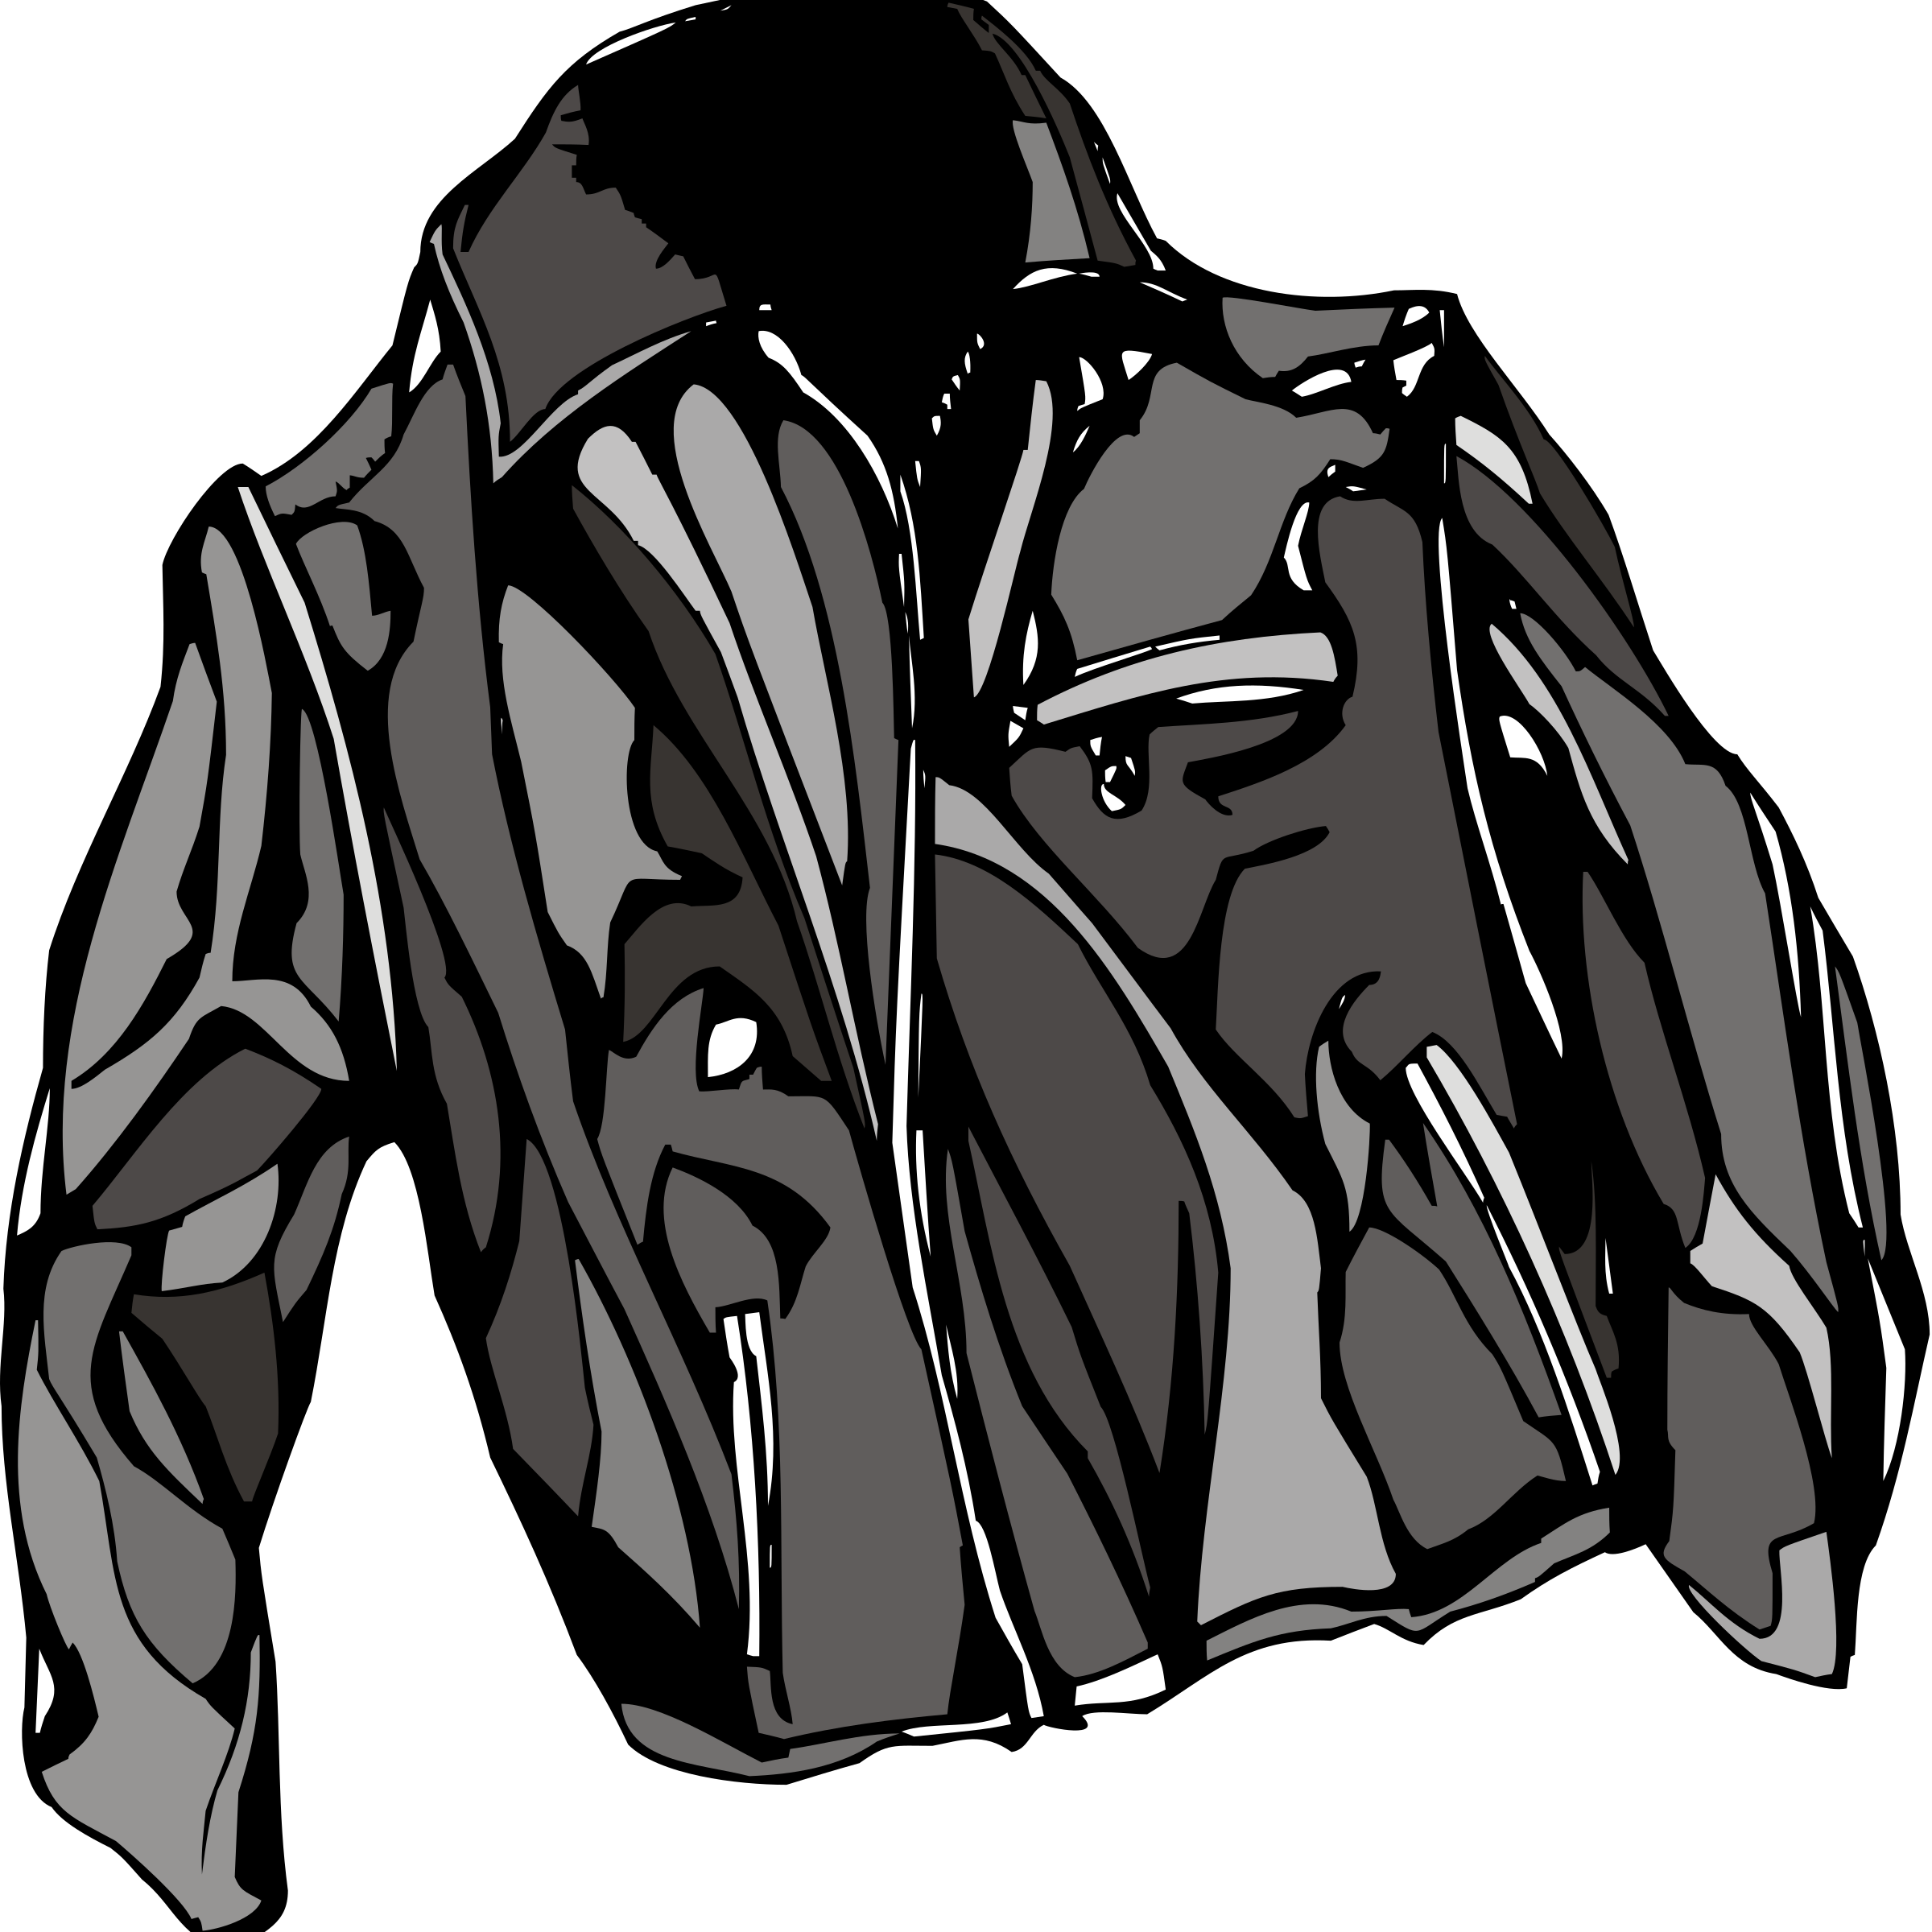 hanger clipart drawn coat